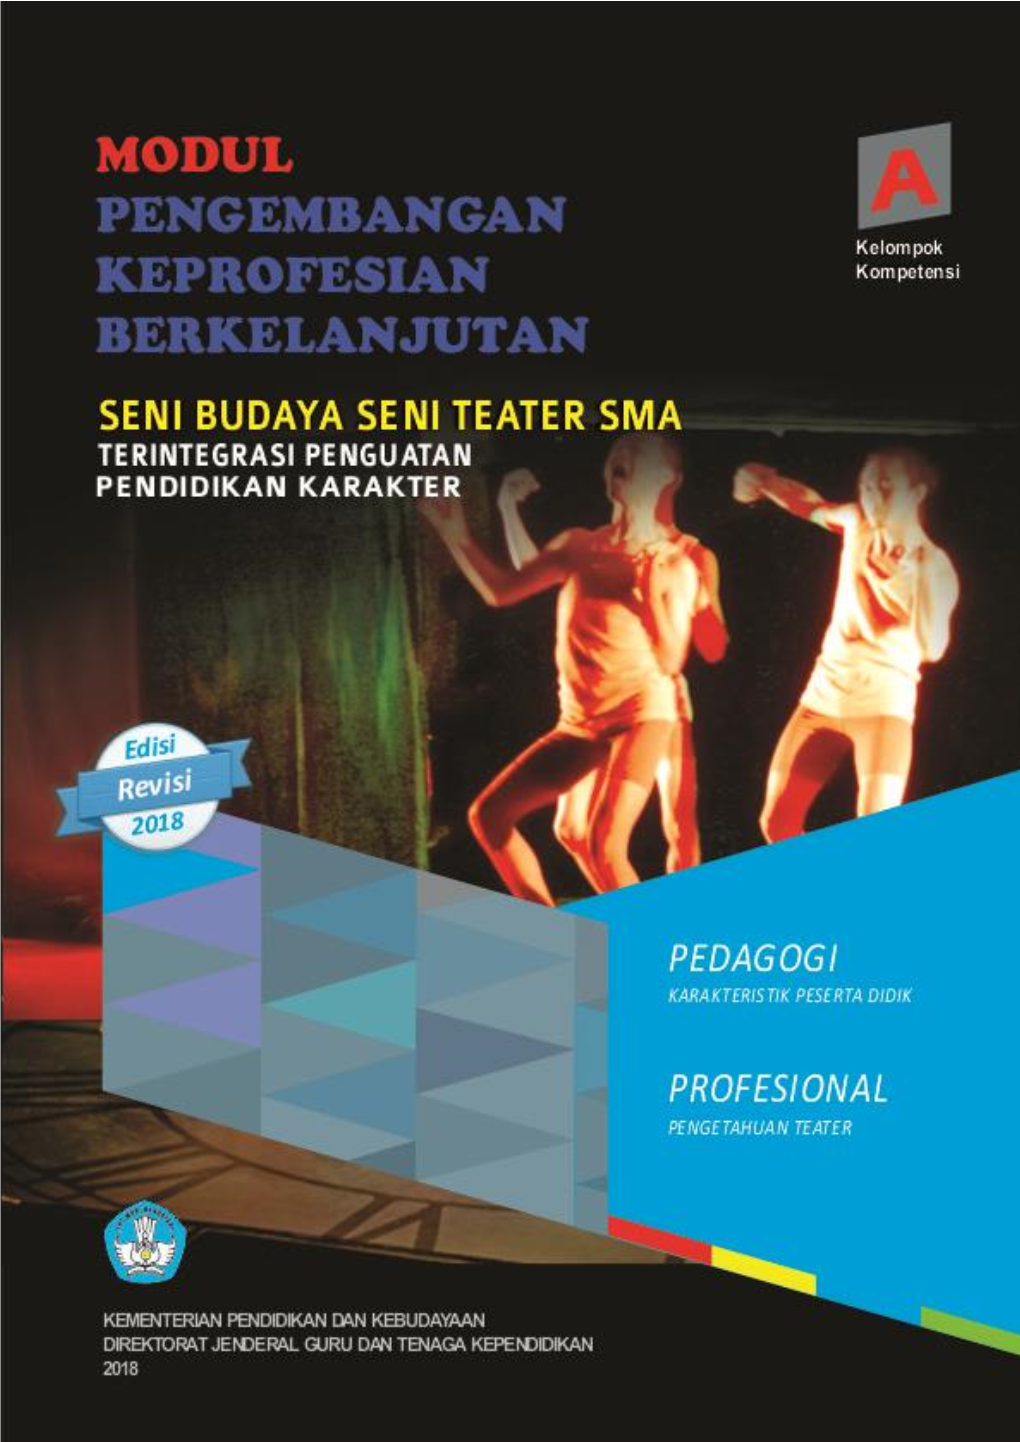 1. Seni Budaya Seni Teater SMA KK A.Pdf